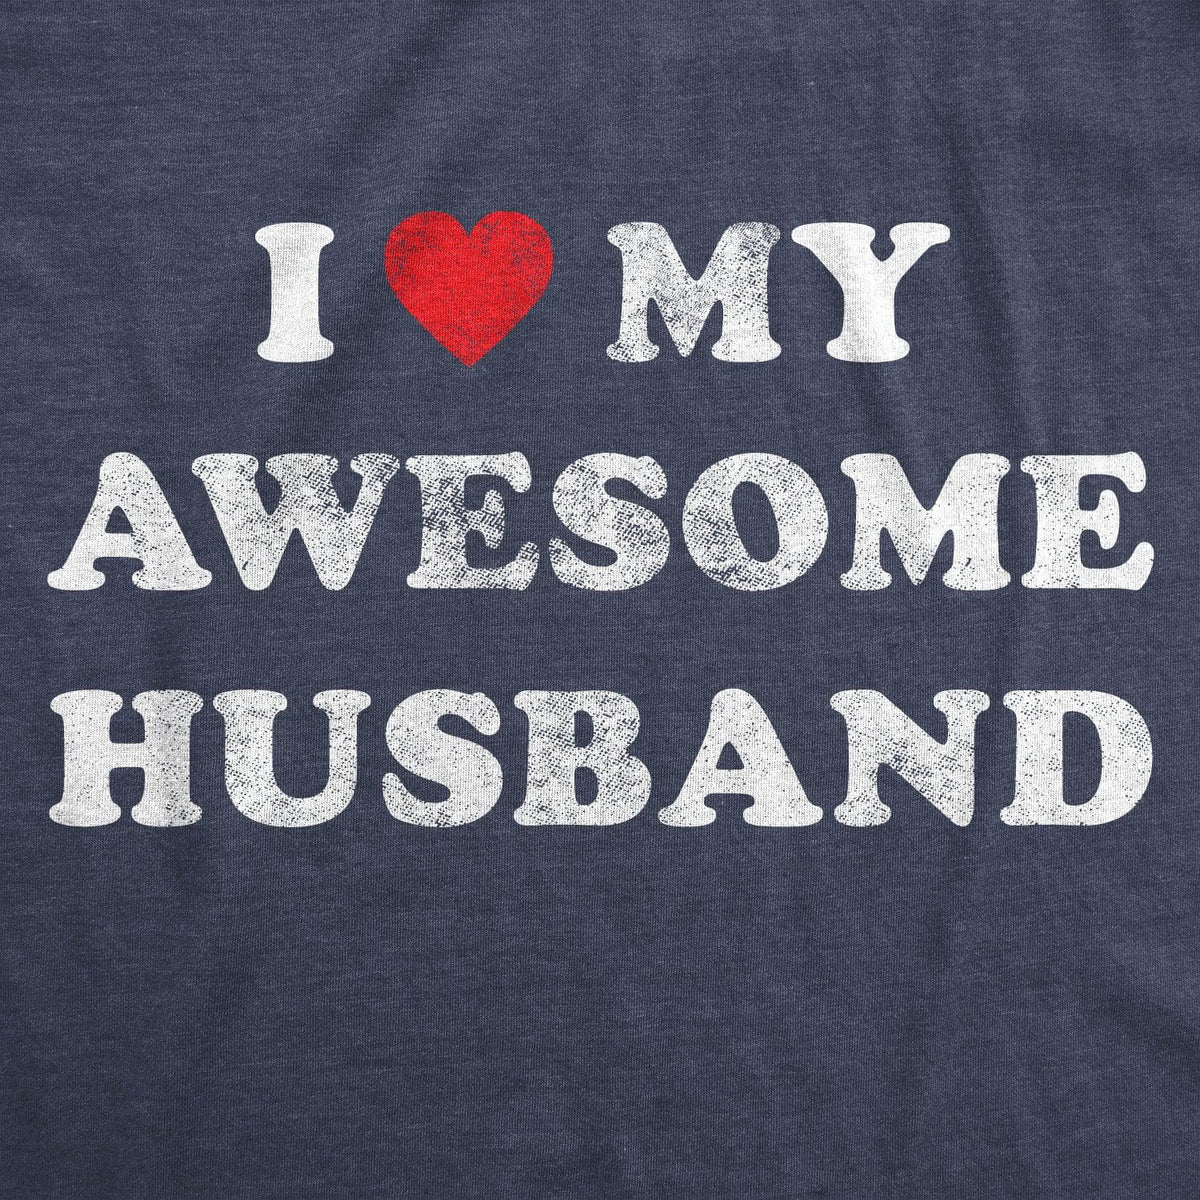 I Love My Awesome Husband Women&#39;s Tshirt  -  Crazy Dog T-Shirts